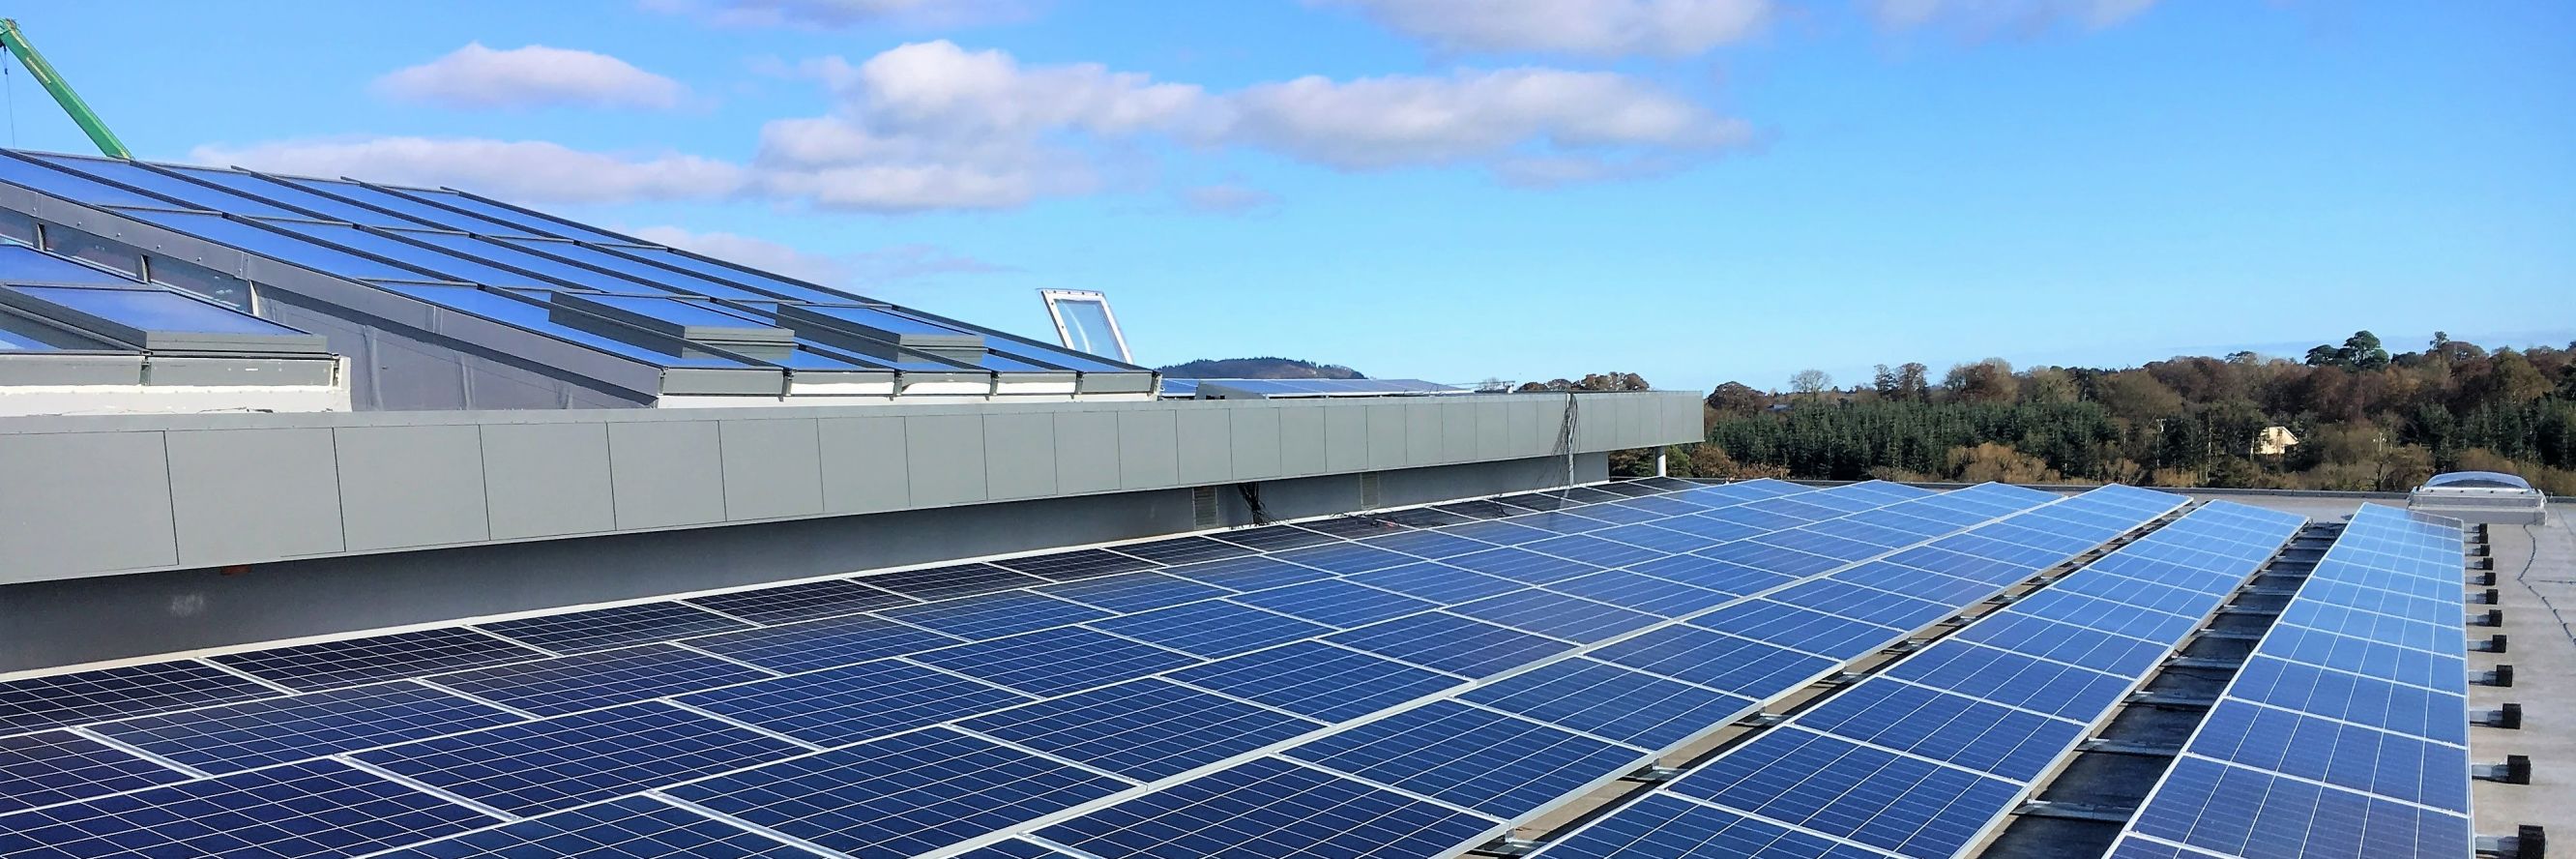 Solar panels on an industrial property Ireland